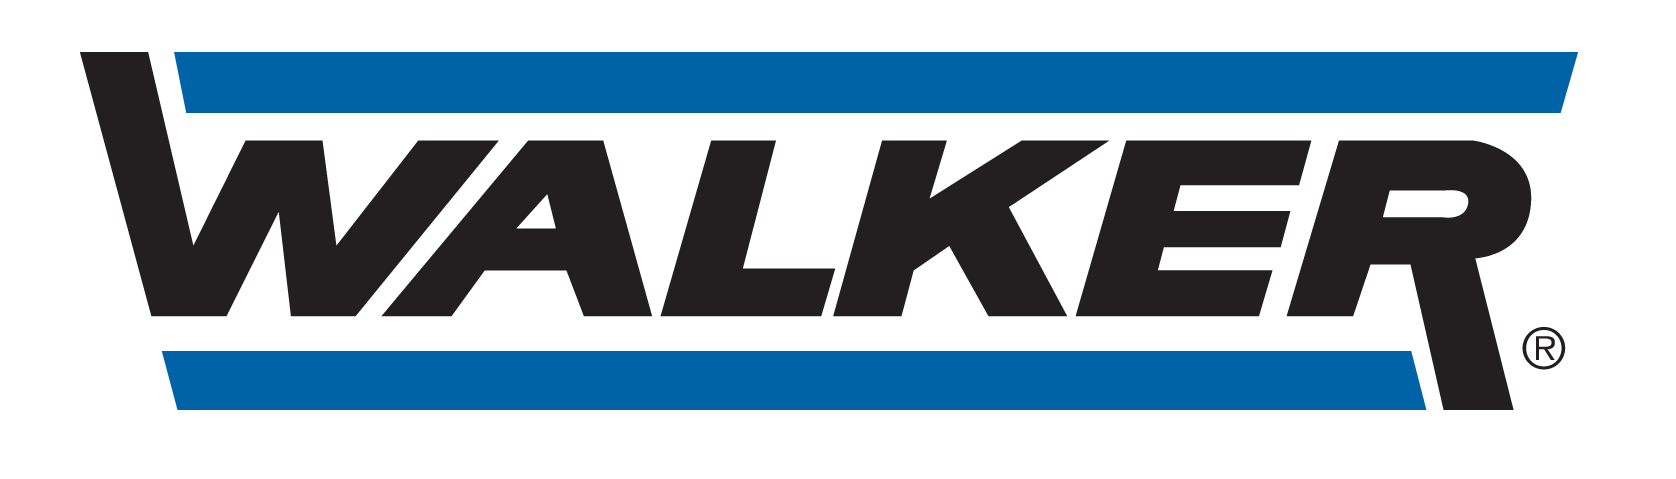 GARAGE GLOAGUEN - logo Walker